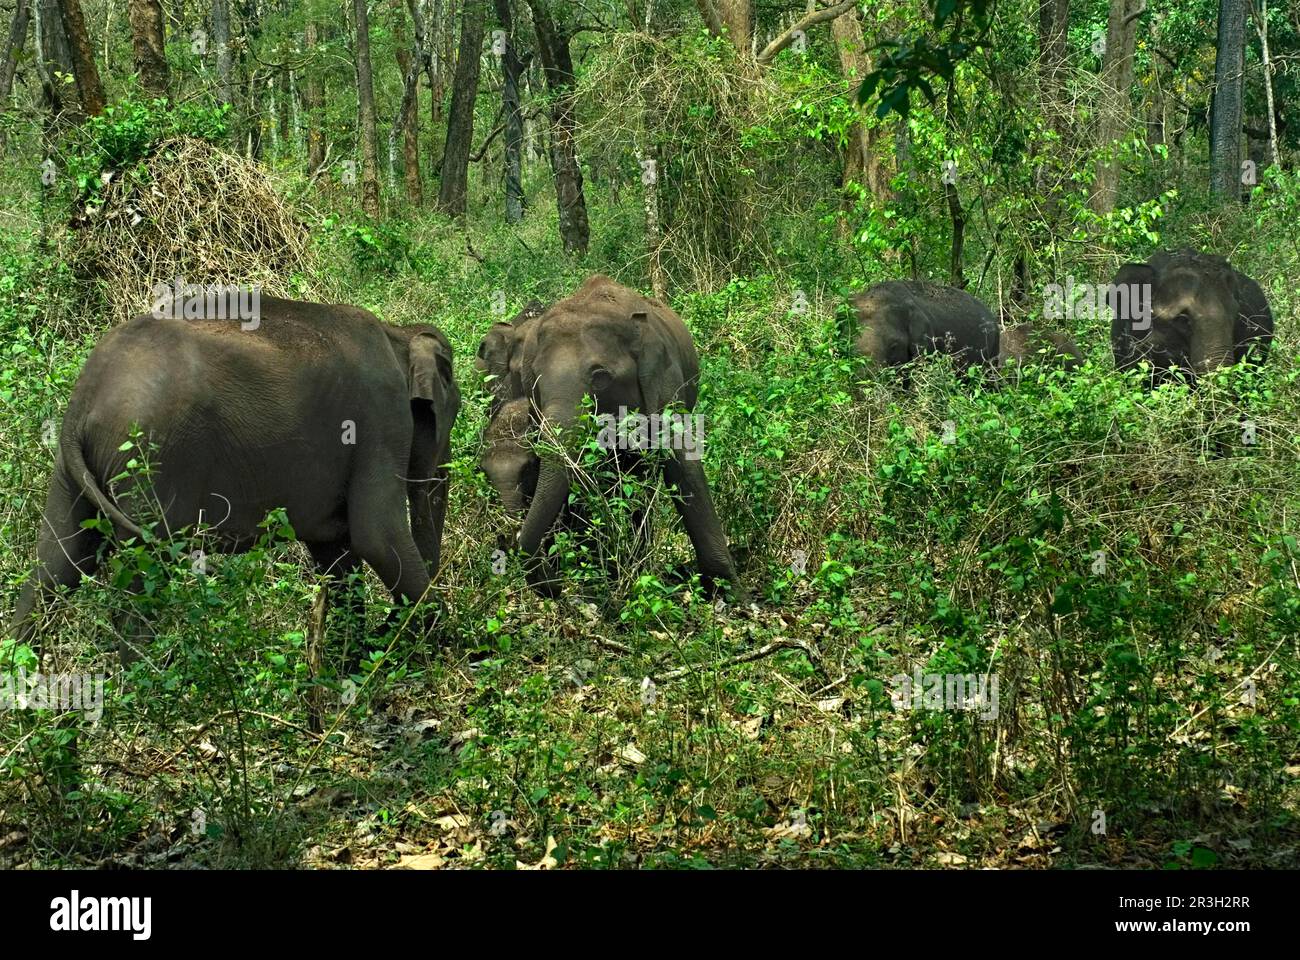 Asian elephant, Indian elephant, asian elephants (Elephas maximus), Indian elephants, elephants, mammals, animals, Asian elephant herd, feeding in Stock Photo